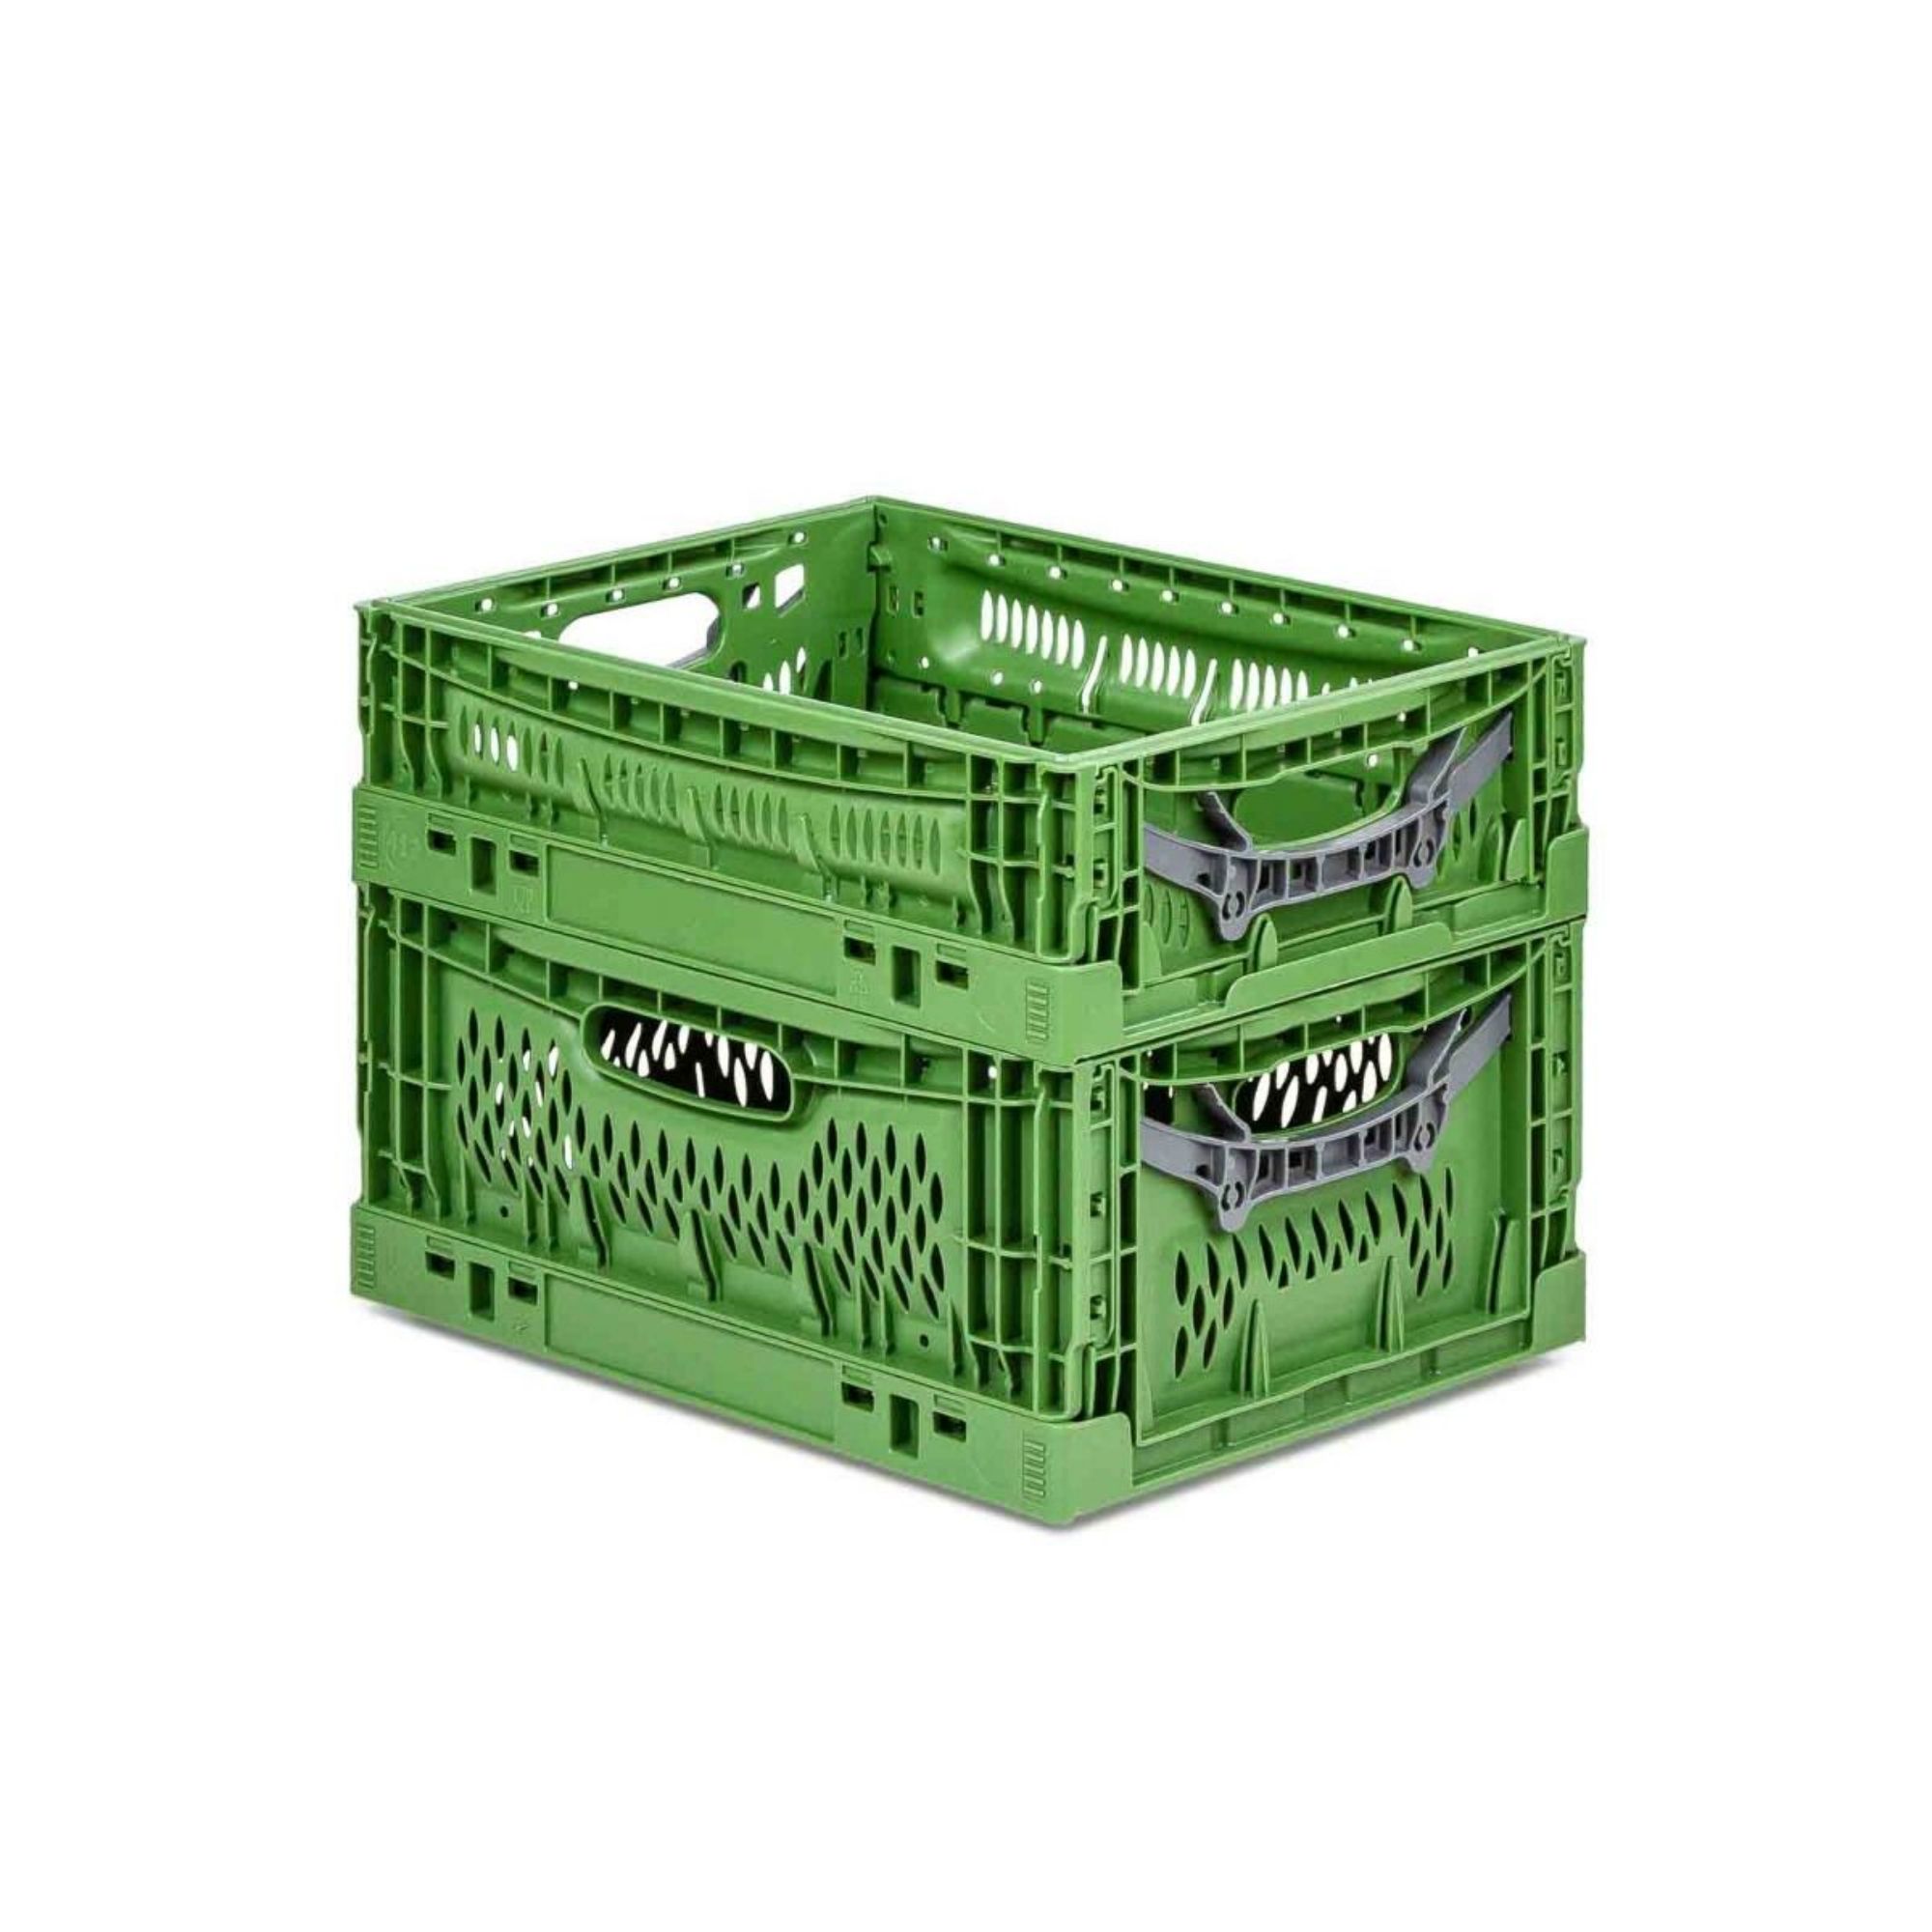 SuperSparSet 10x Stabile Profi-Klappbox Chameleon in Industriequalität | HxBxT 18x40x60cm | 35 Liter | klappbar stapelbar durchbrochen lebensmittelecht | Eurobox Eurobehälter Transportbehälter Stapelbehlter Faltbox